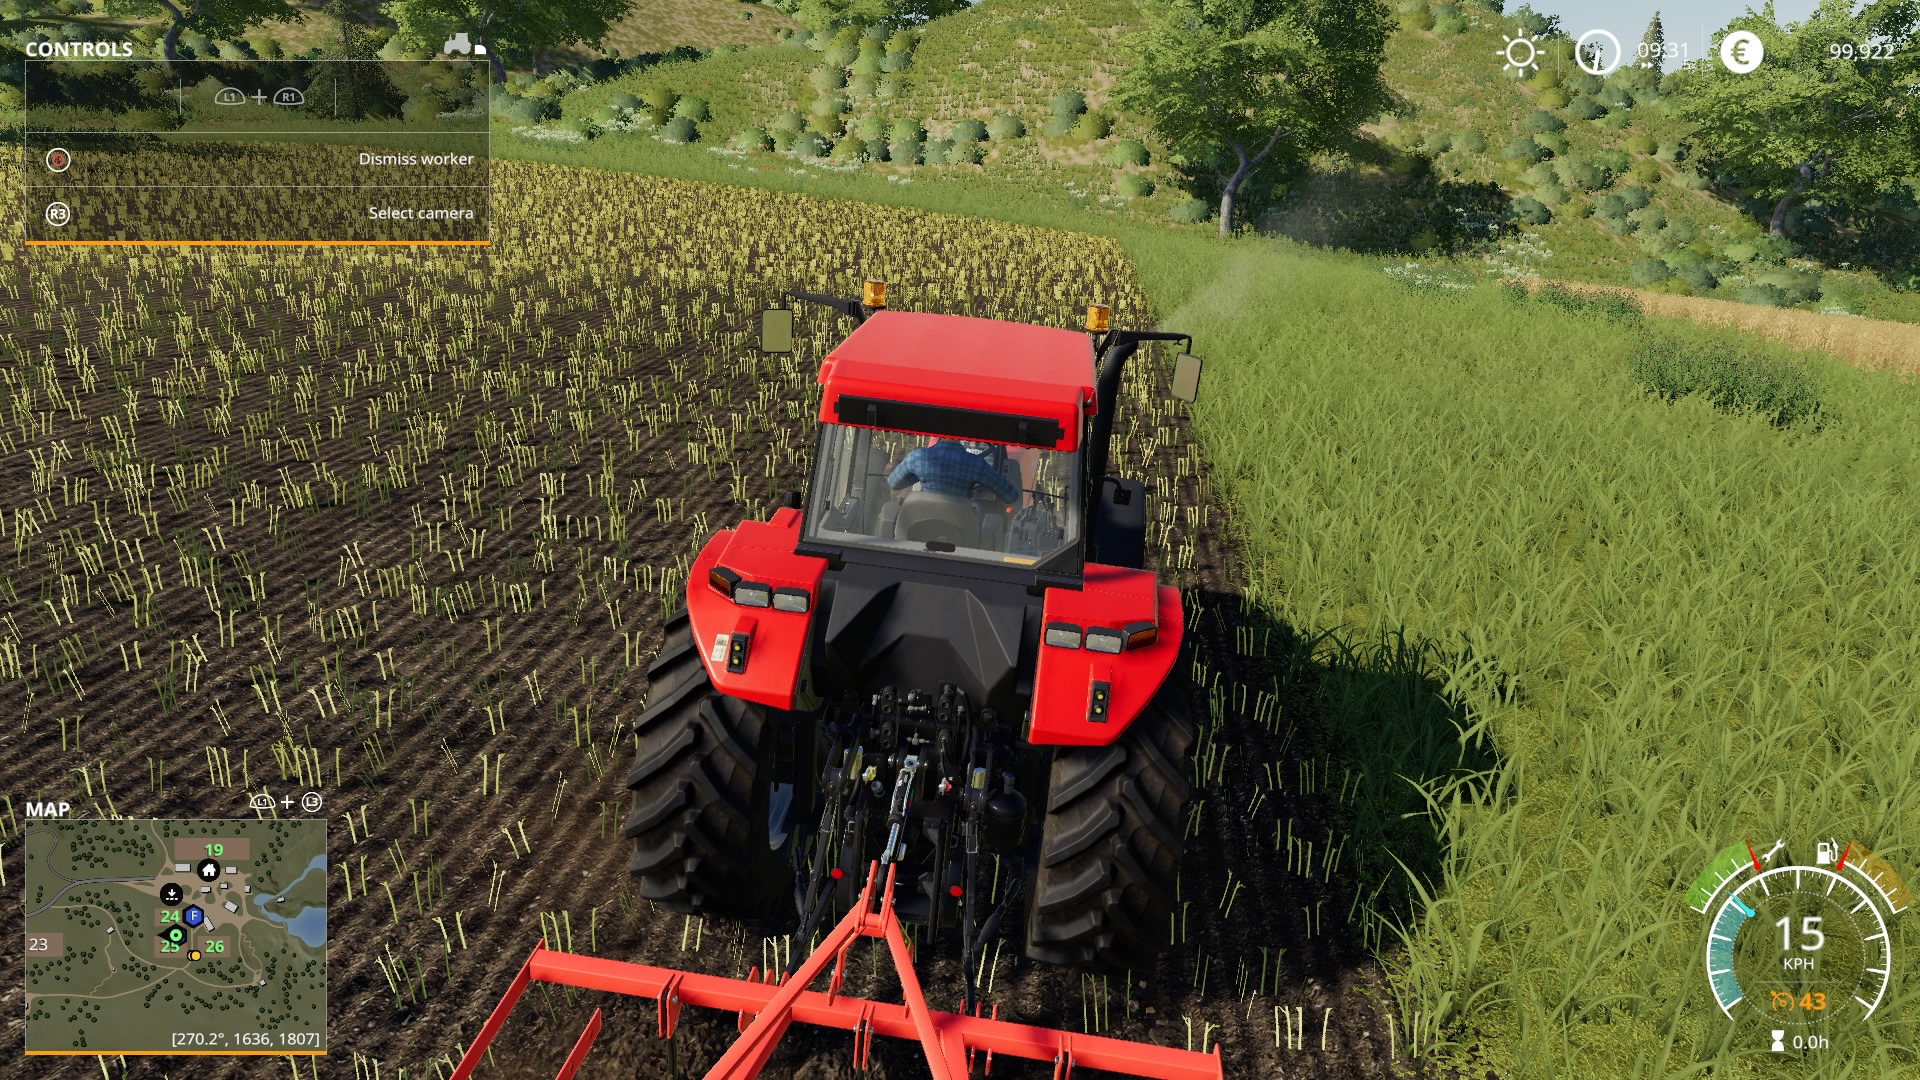 Farming Simulator 19 Review